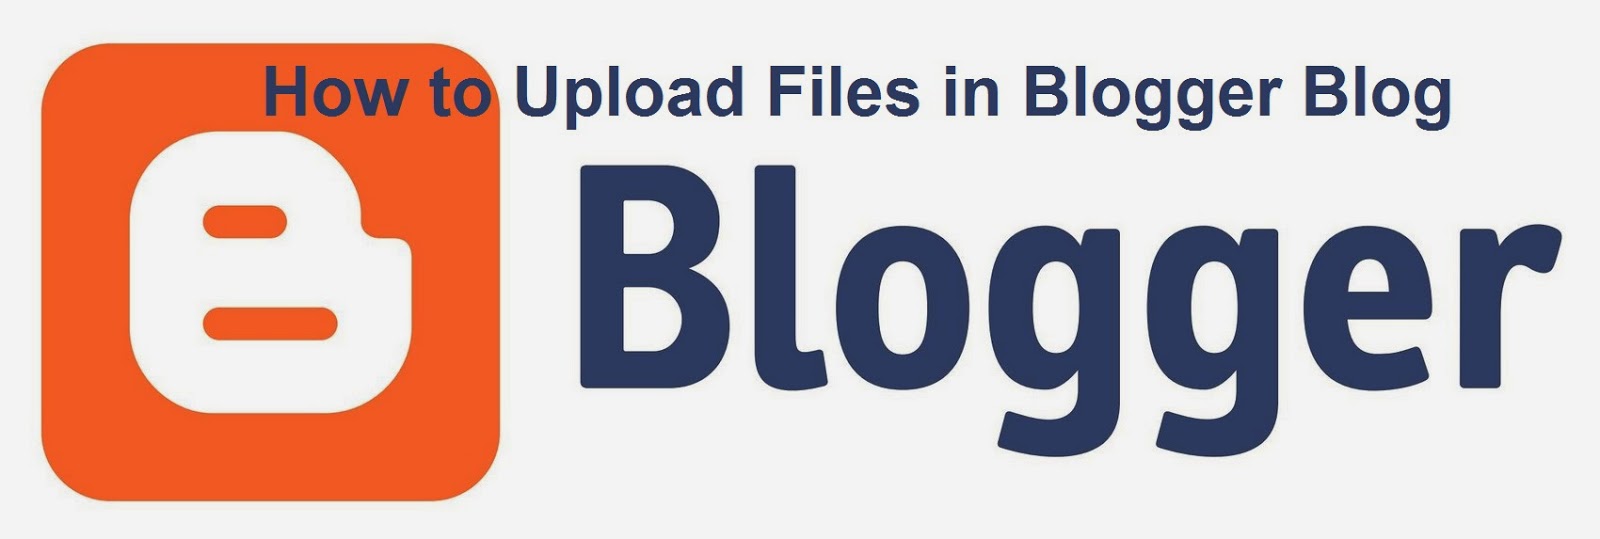 How to Upload Files in Blogger Blog : eAskme